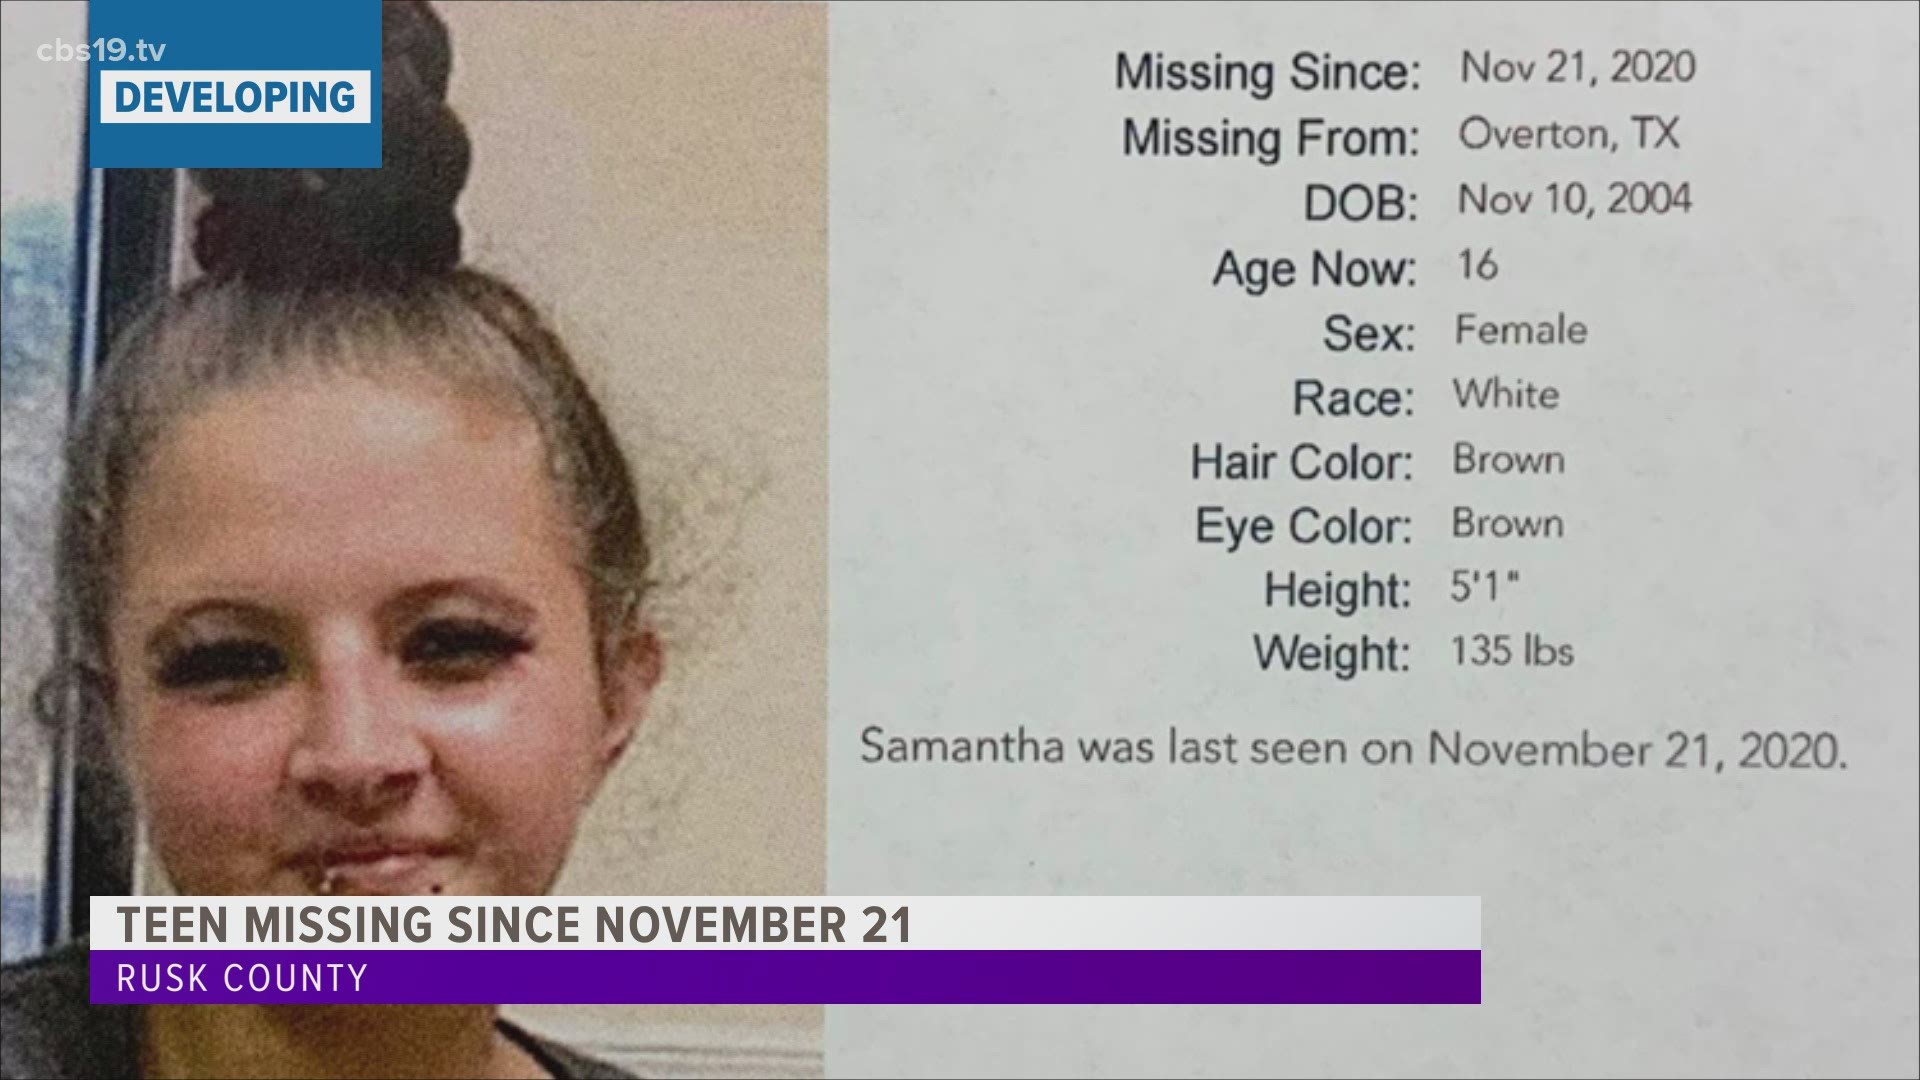 Samantha Williams, 16, was last seen in the Overton area.